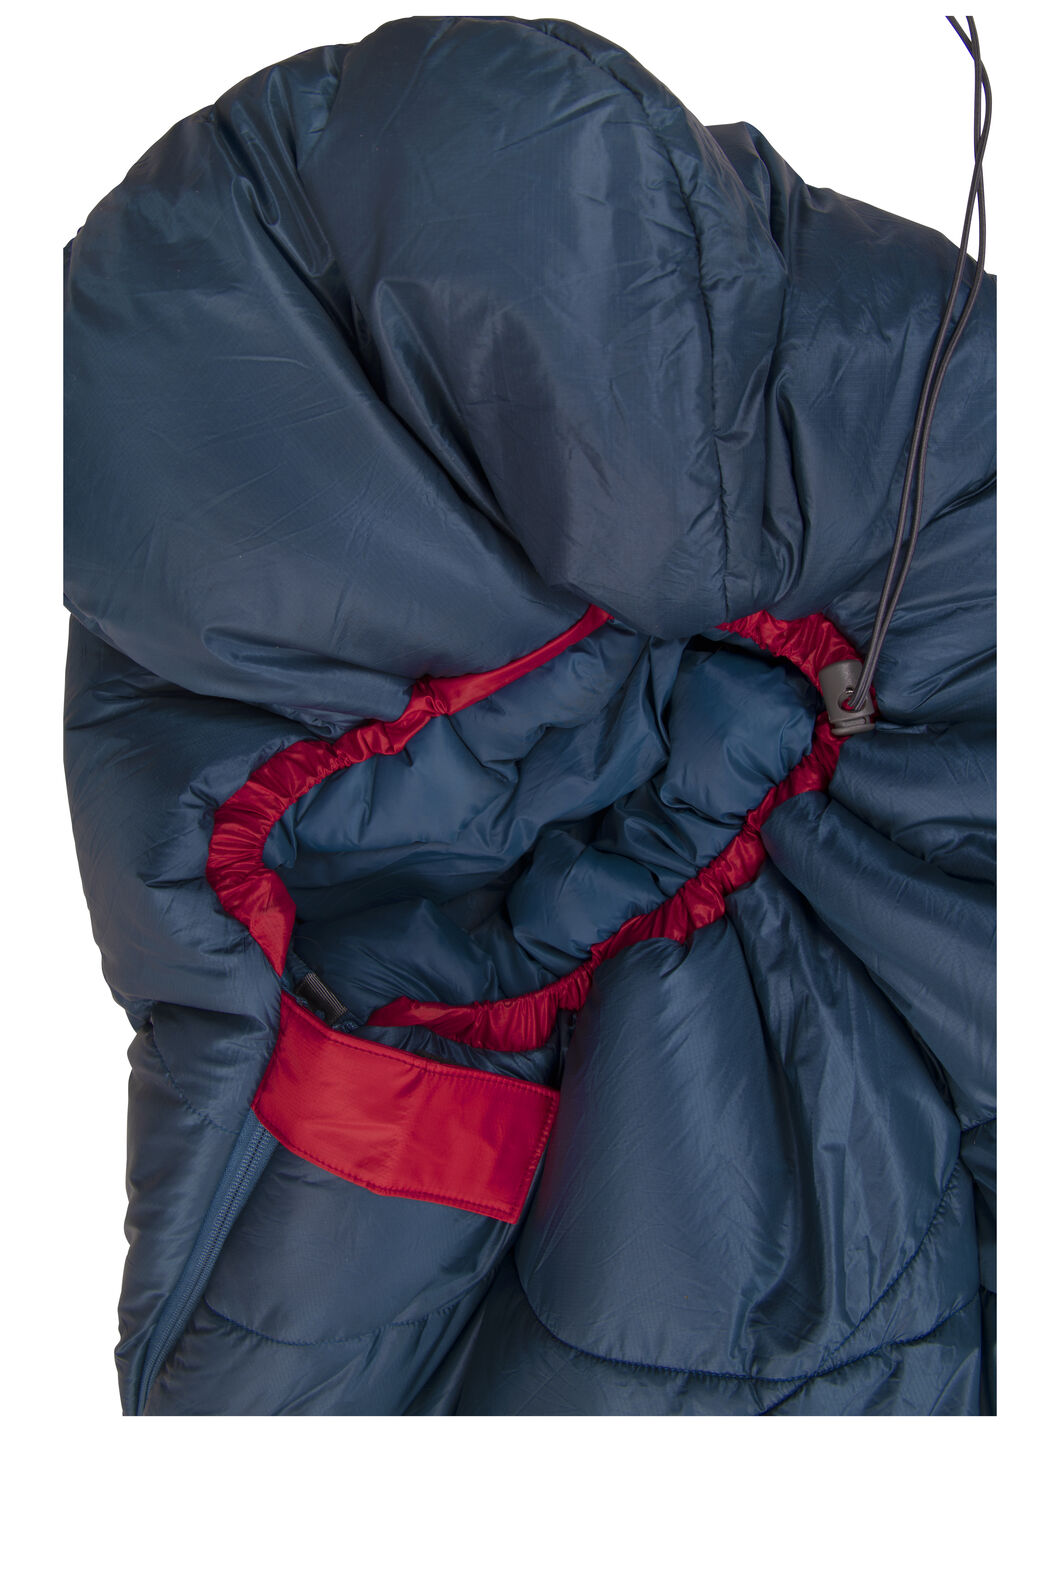 Macpac Aspire 500 Sleeping Bag — Standard | Macpac